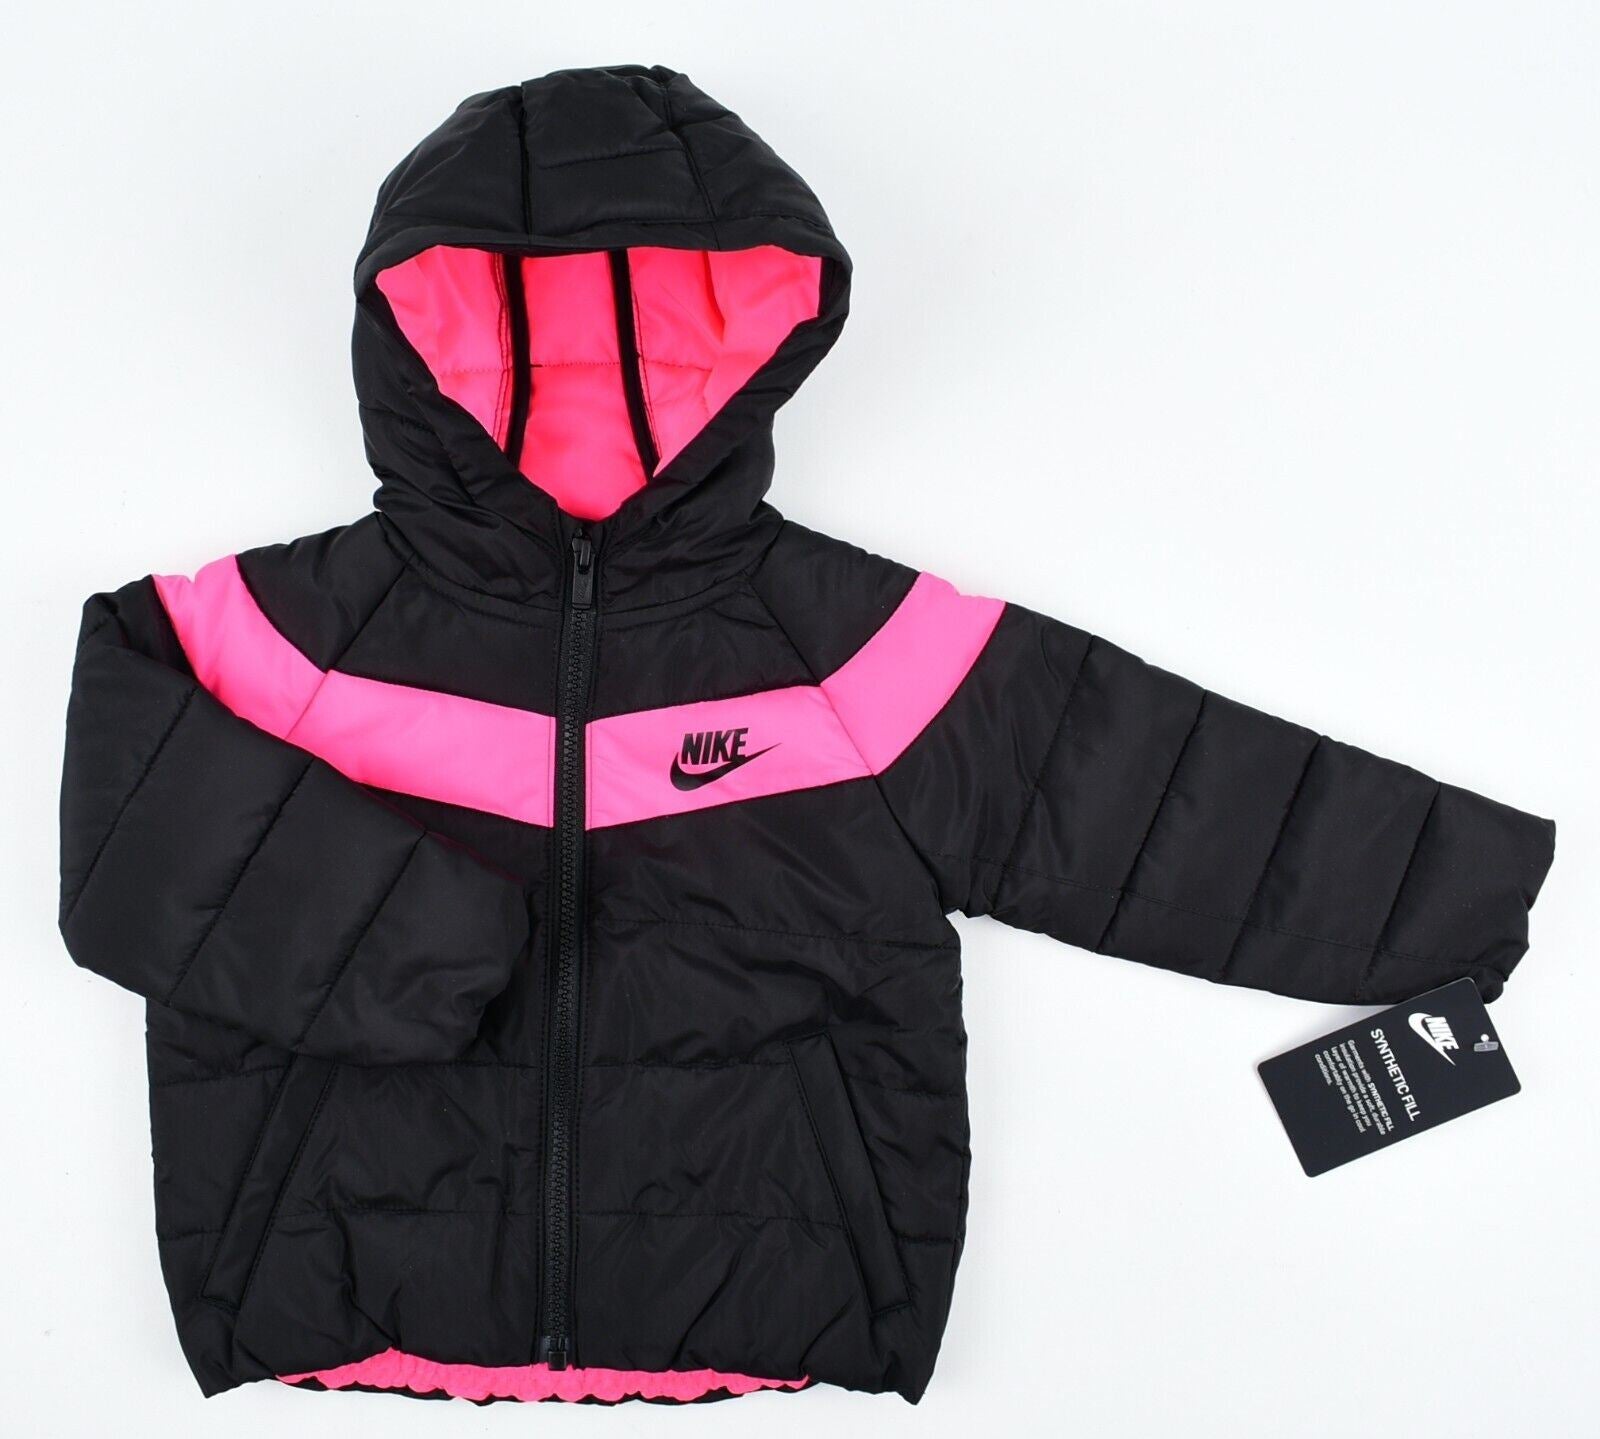 NIKE Baby Girls Padded Hooded Jacket, Black/Pink, size 18 months